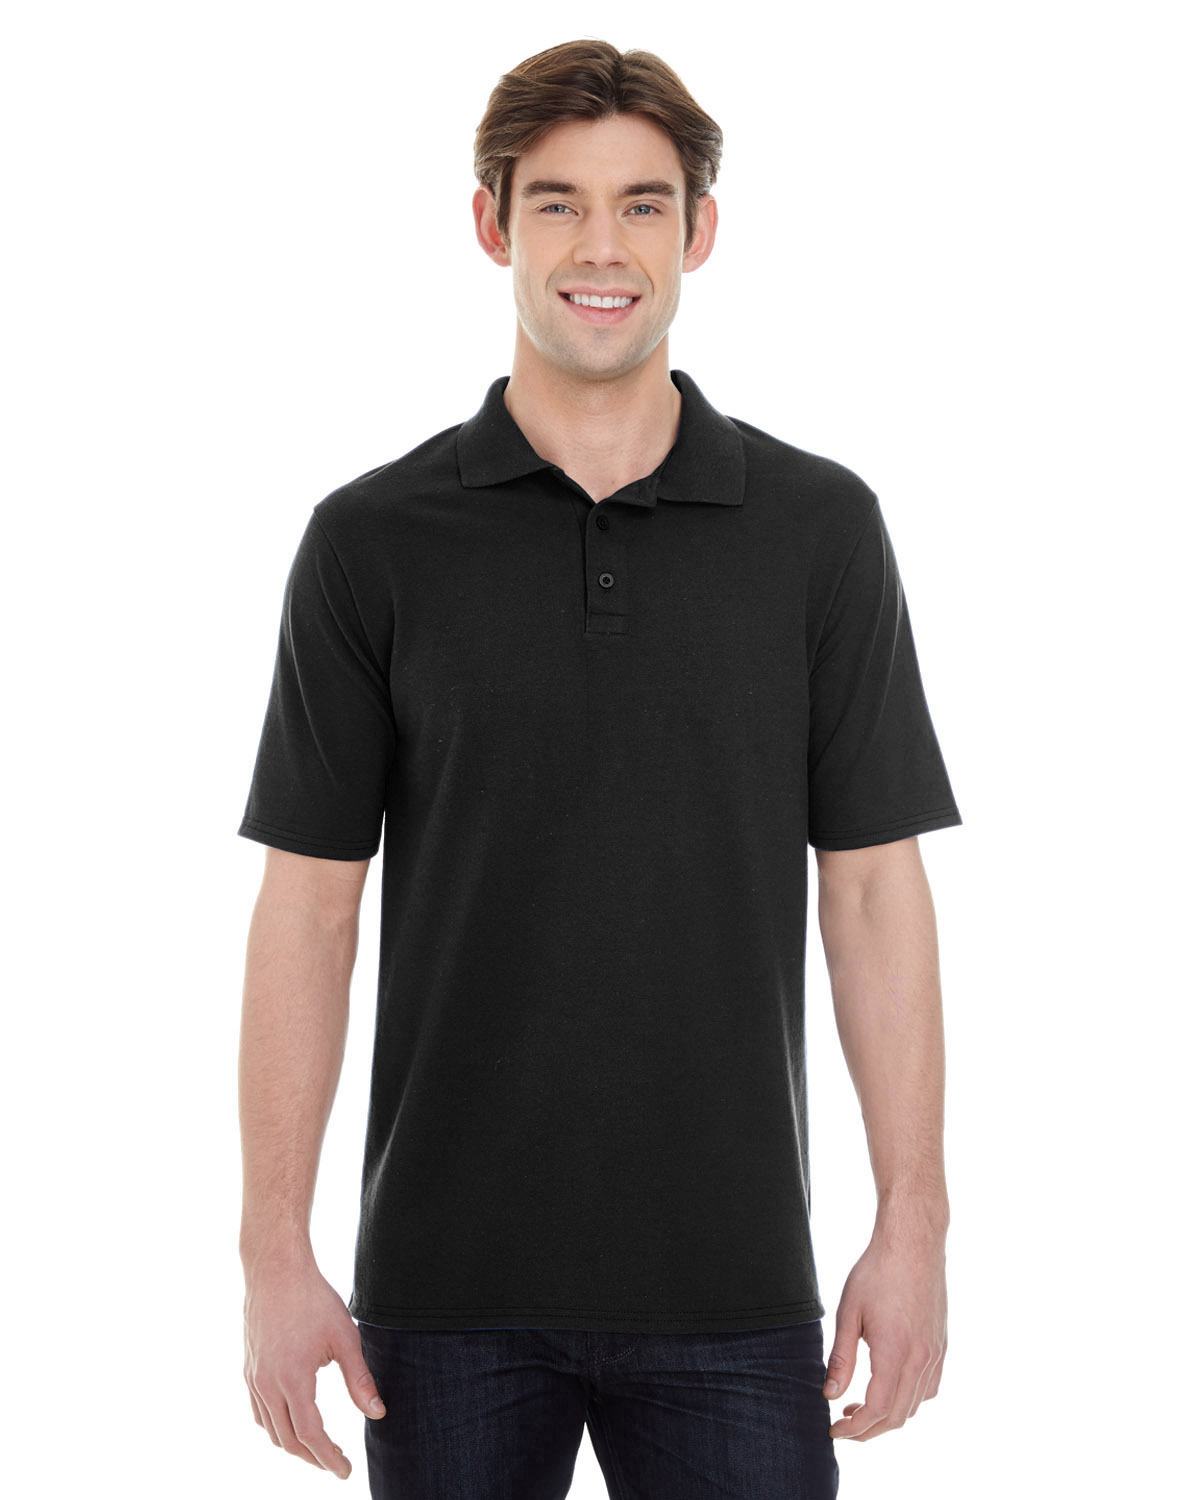 https://images.shirtspace.com/fullsize/5FnCZIjMubgCyMIyJqVtHA%3D%3D/95776/6424-hanes-055p-men-s-6-5-oz-x-temp-pique-short-sleeve-polo-with-fresh-iq-front-black.jpg